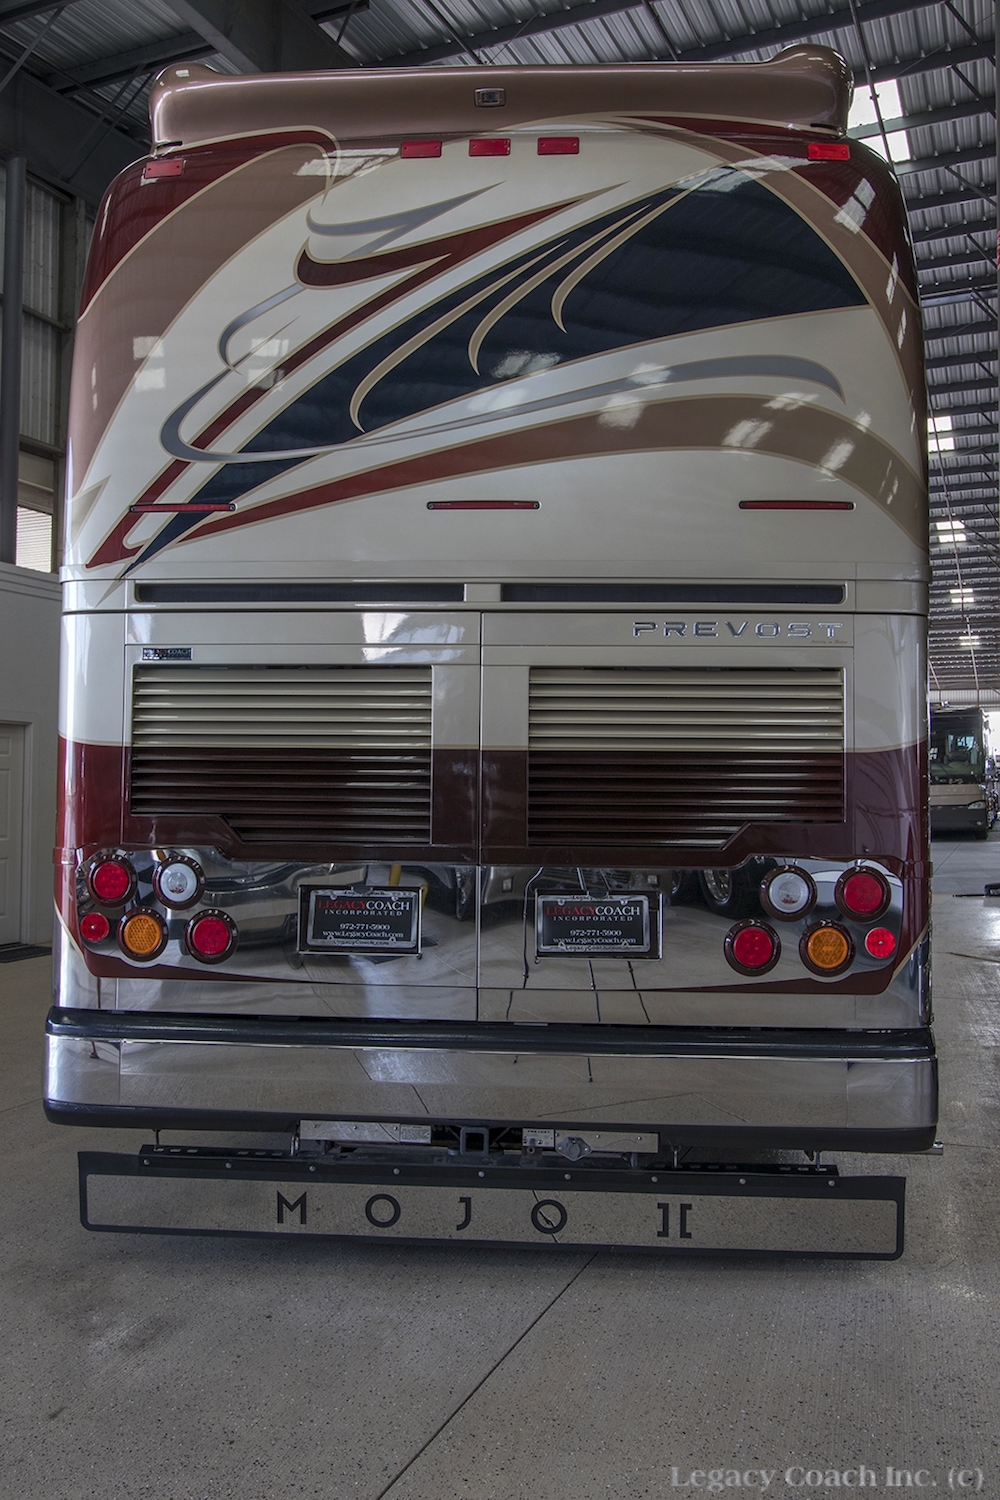 2005 Prevost Country Coach XLII For Sale